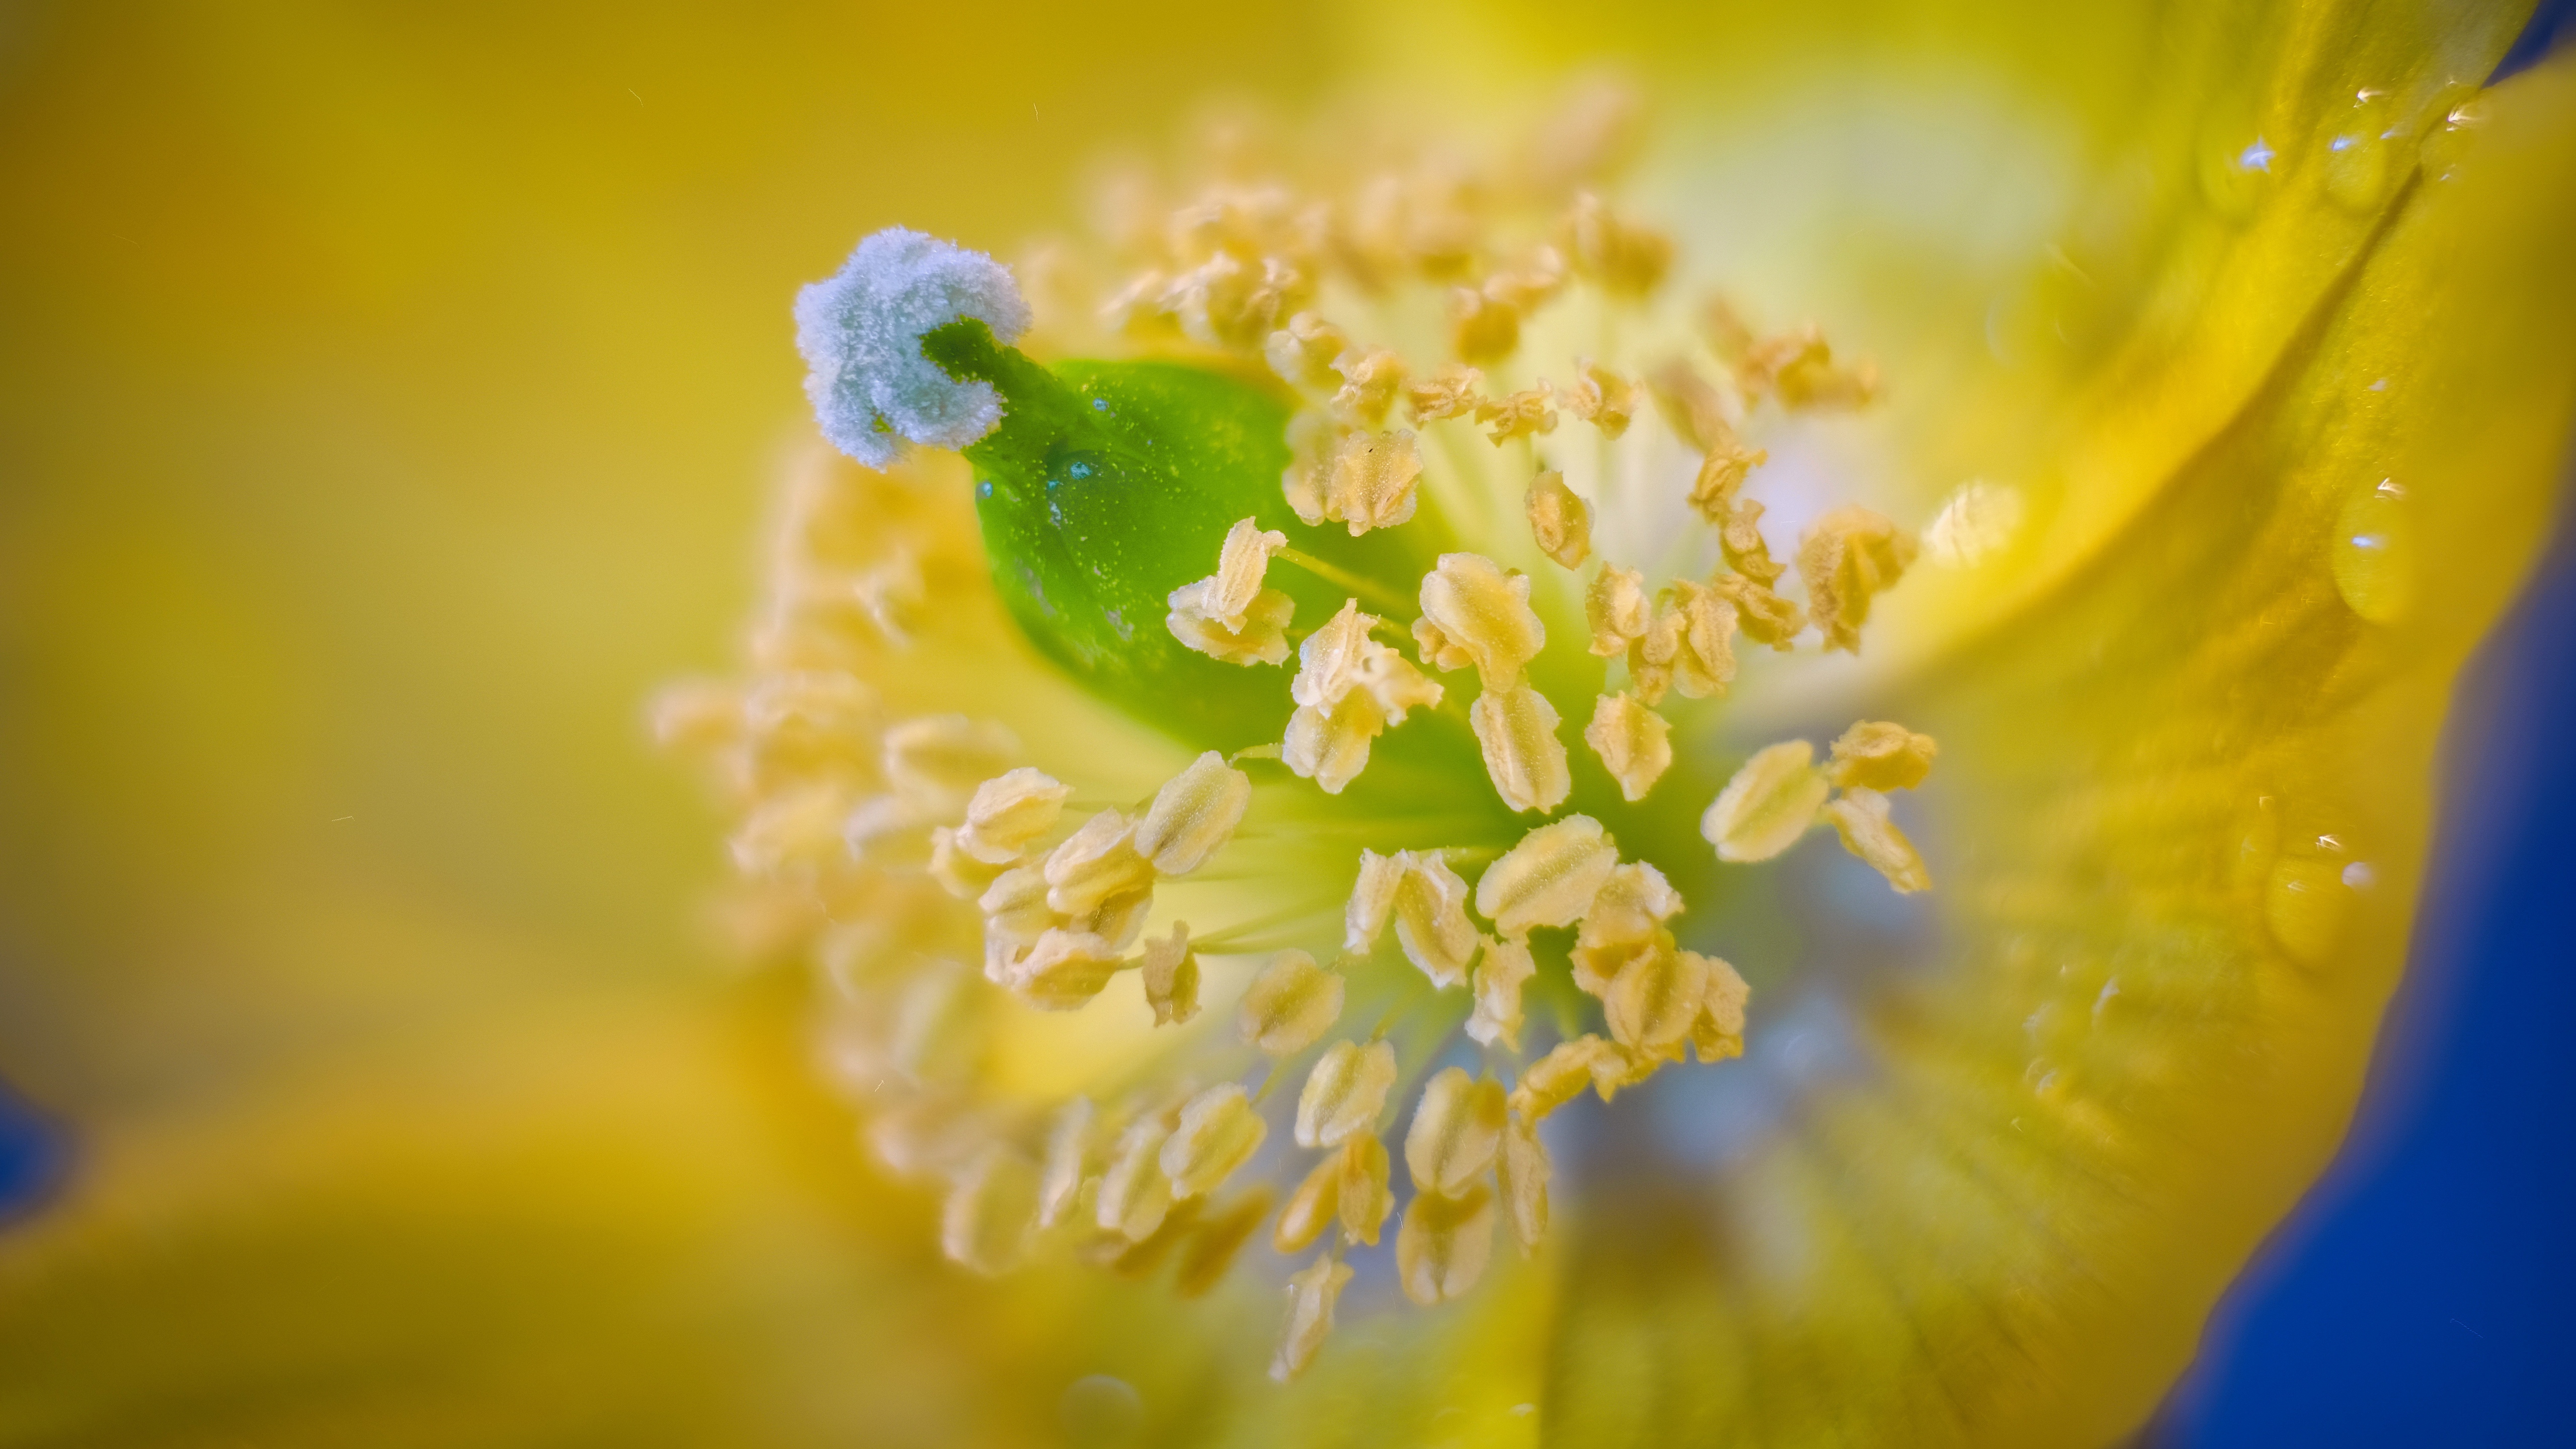 Золотистой пыльцы. Пыльца растений. Пыльца на цветке. Цветочная пыльца макро. Золотая пыльца.